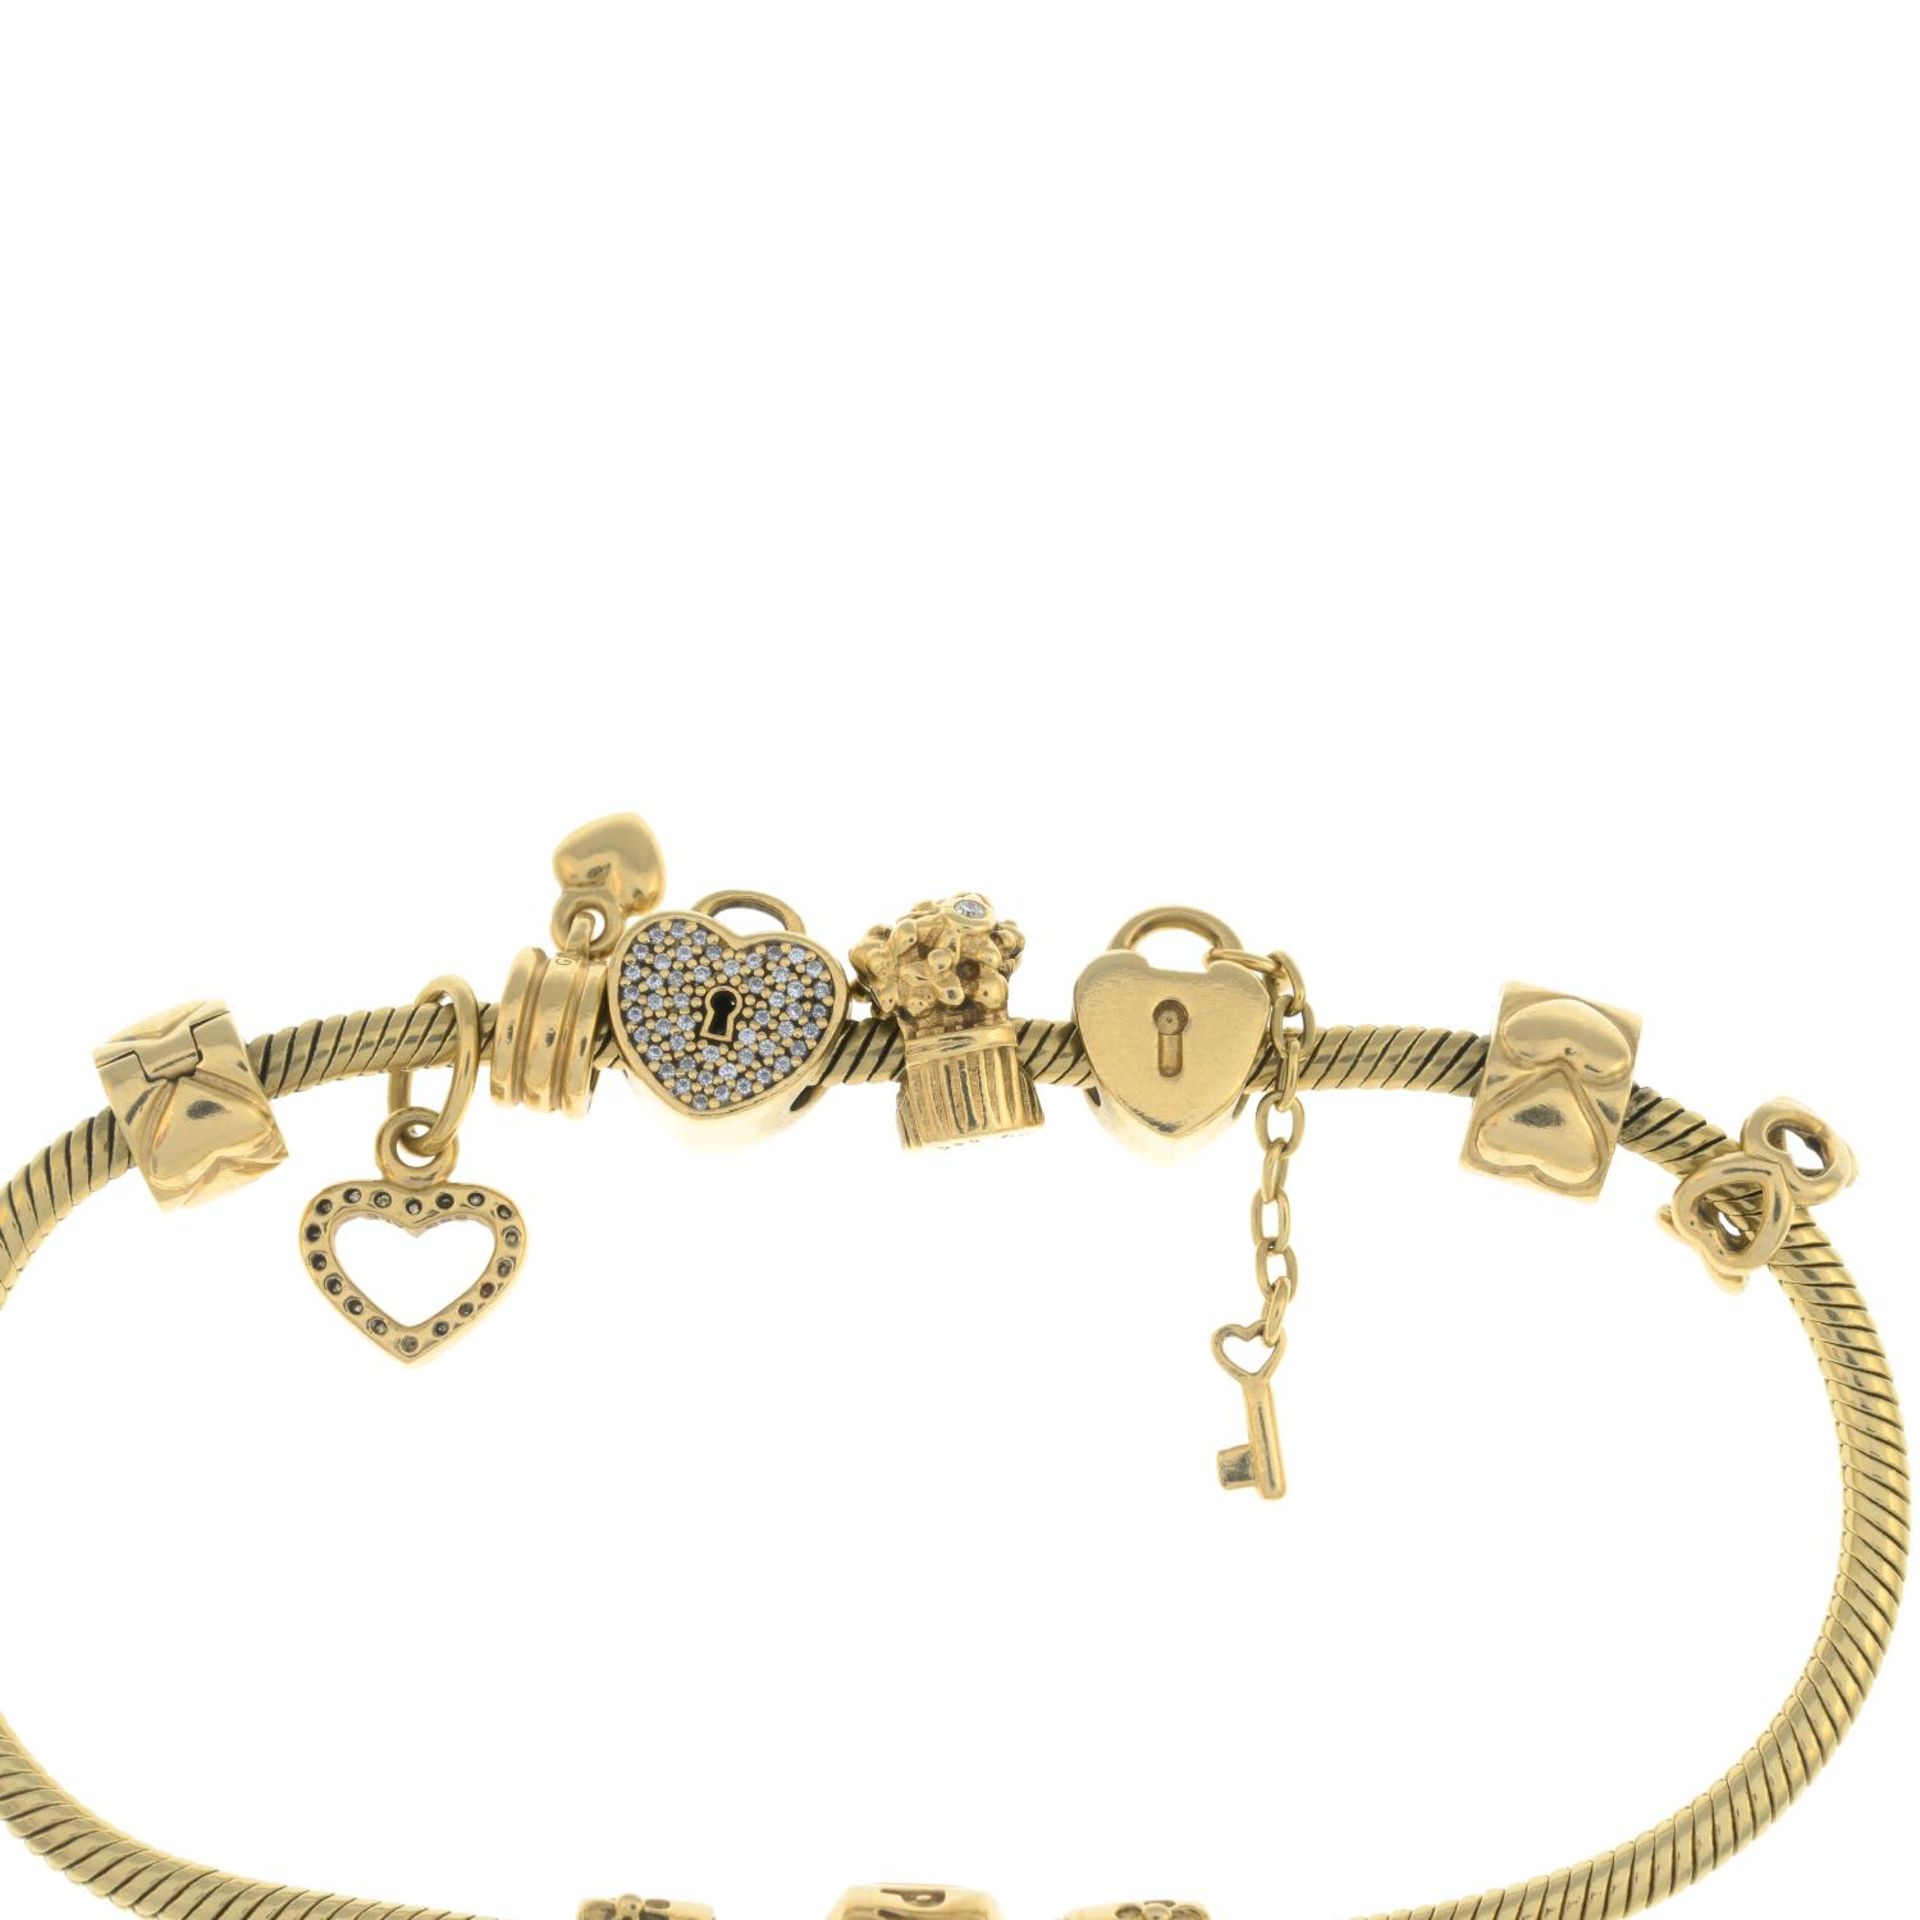 PANDORA - a charm bracelet. - Image 2 of 3